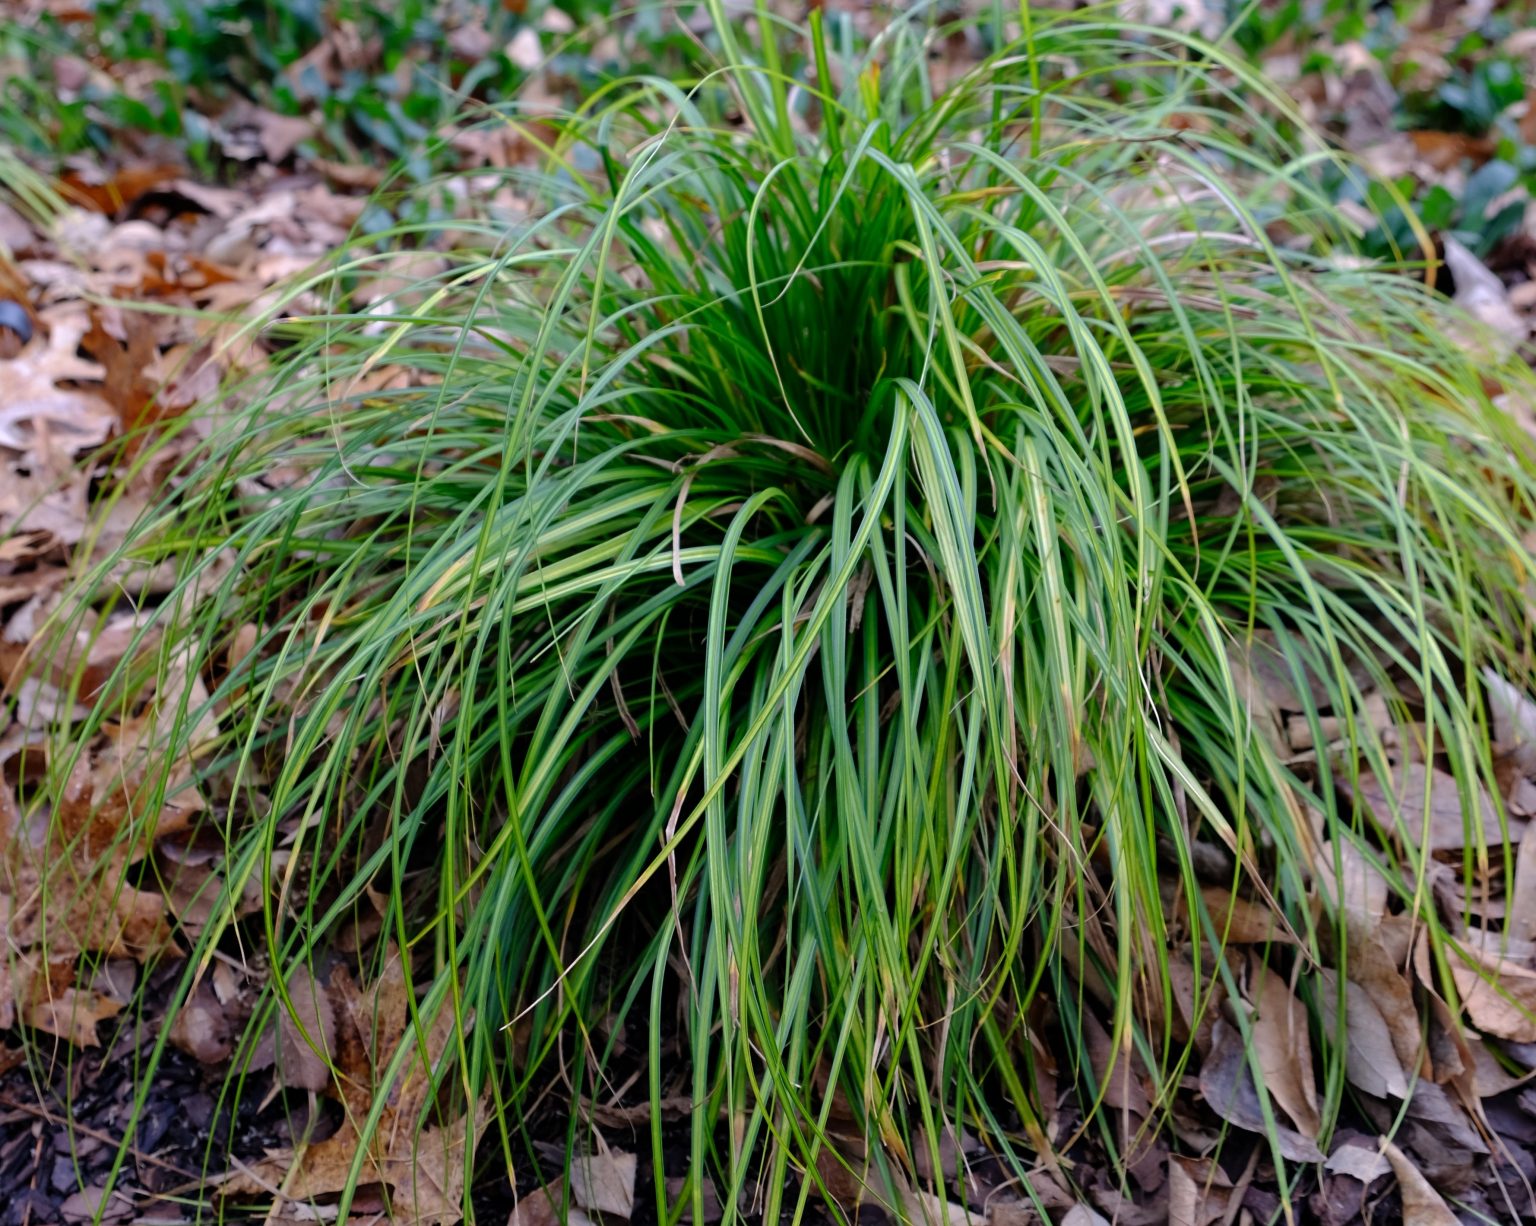 Carex-oshimensis-Evercolor-Everlime-1-Copy-1536x1226